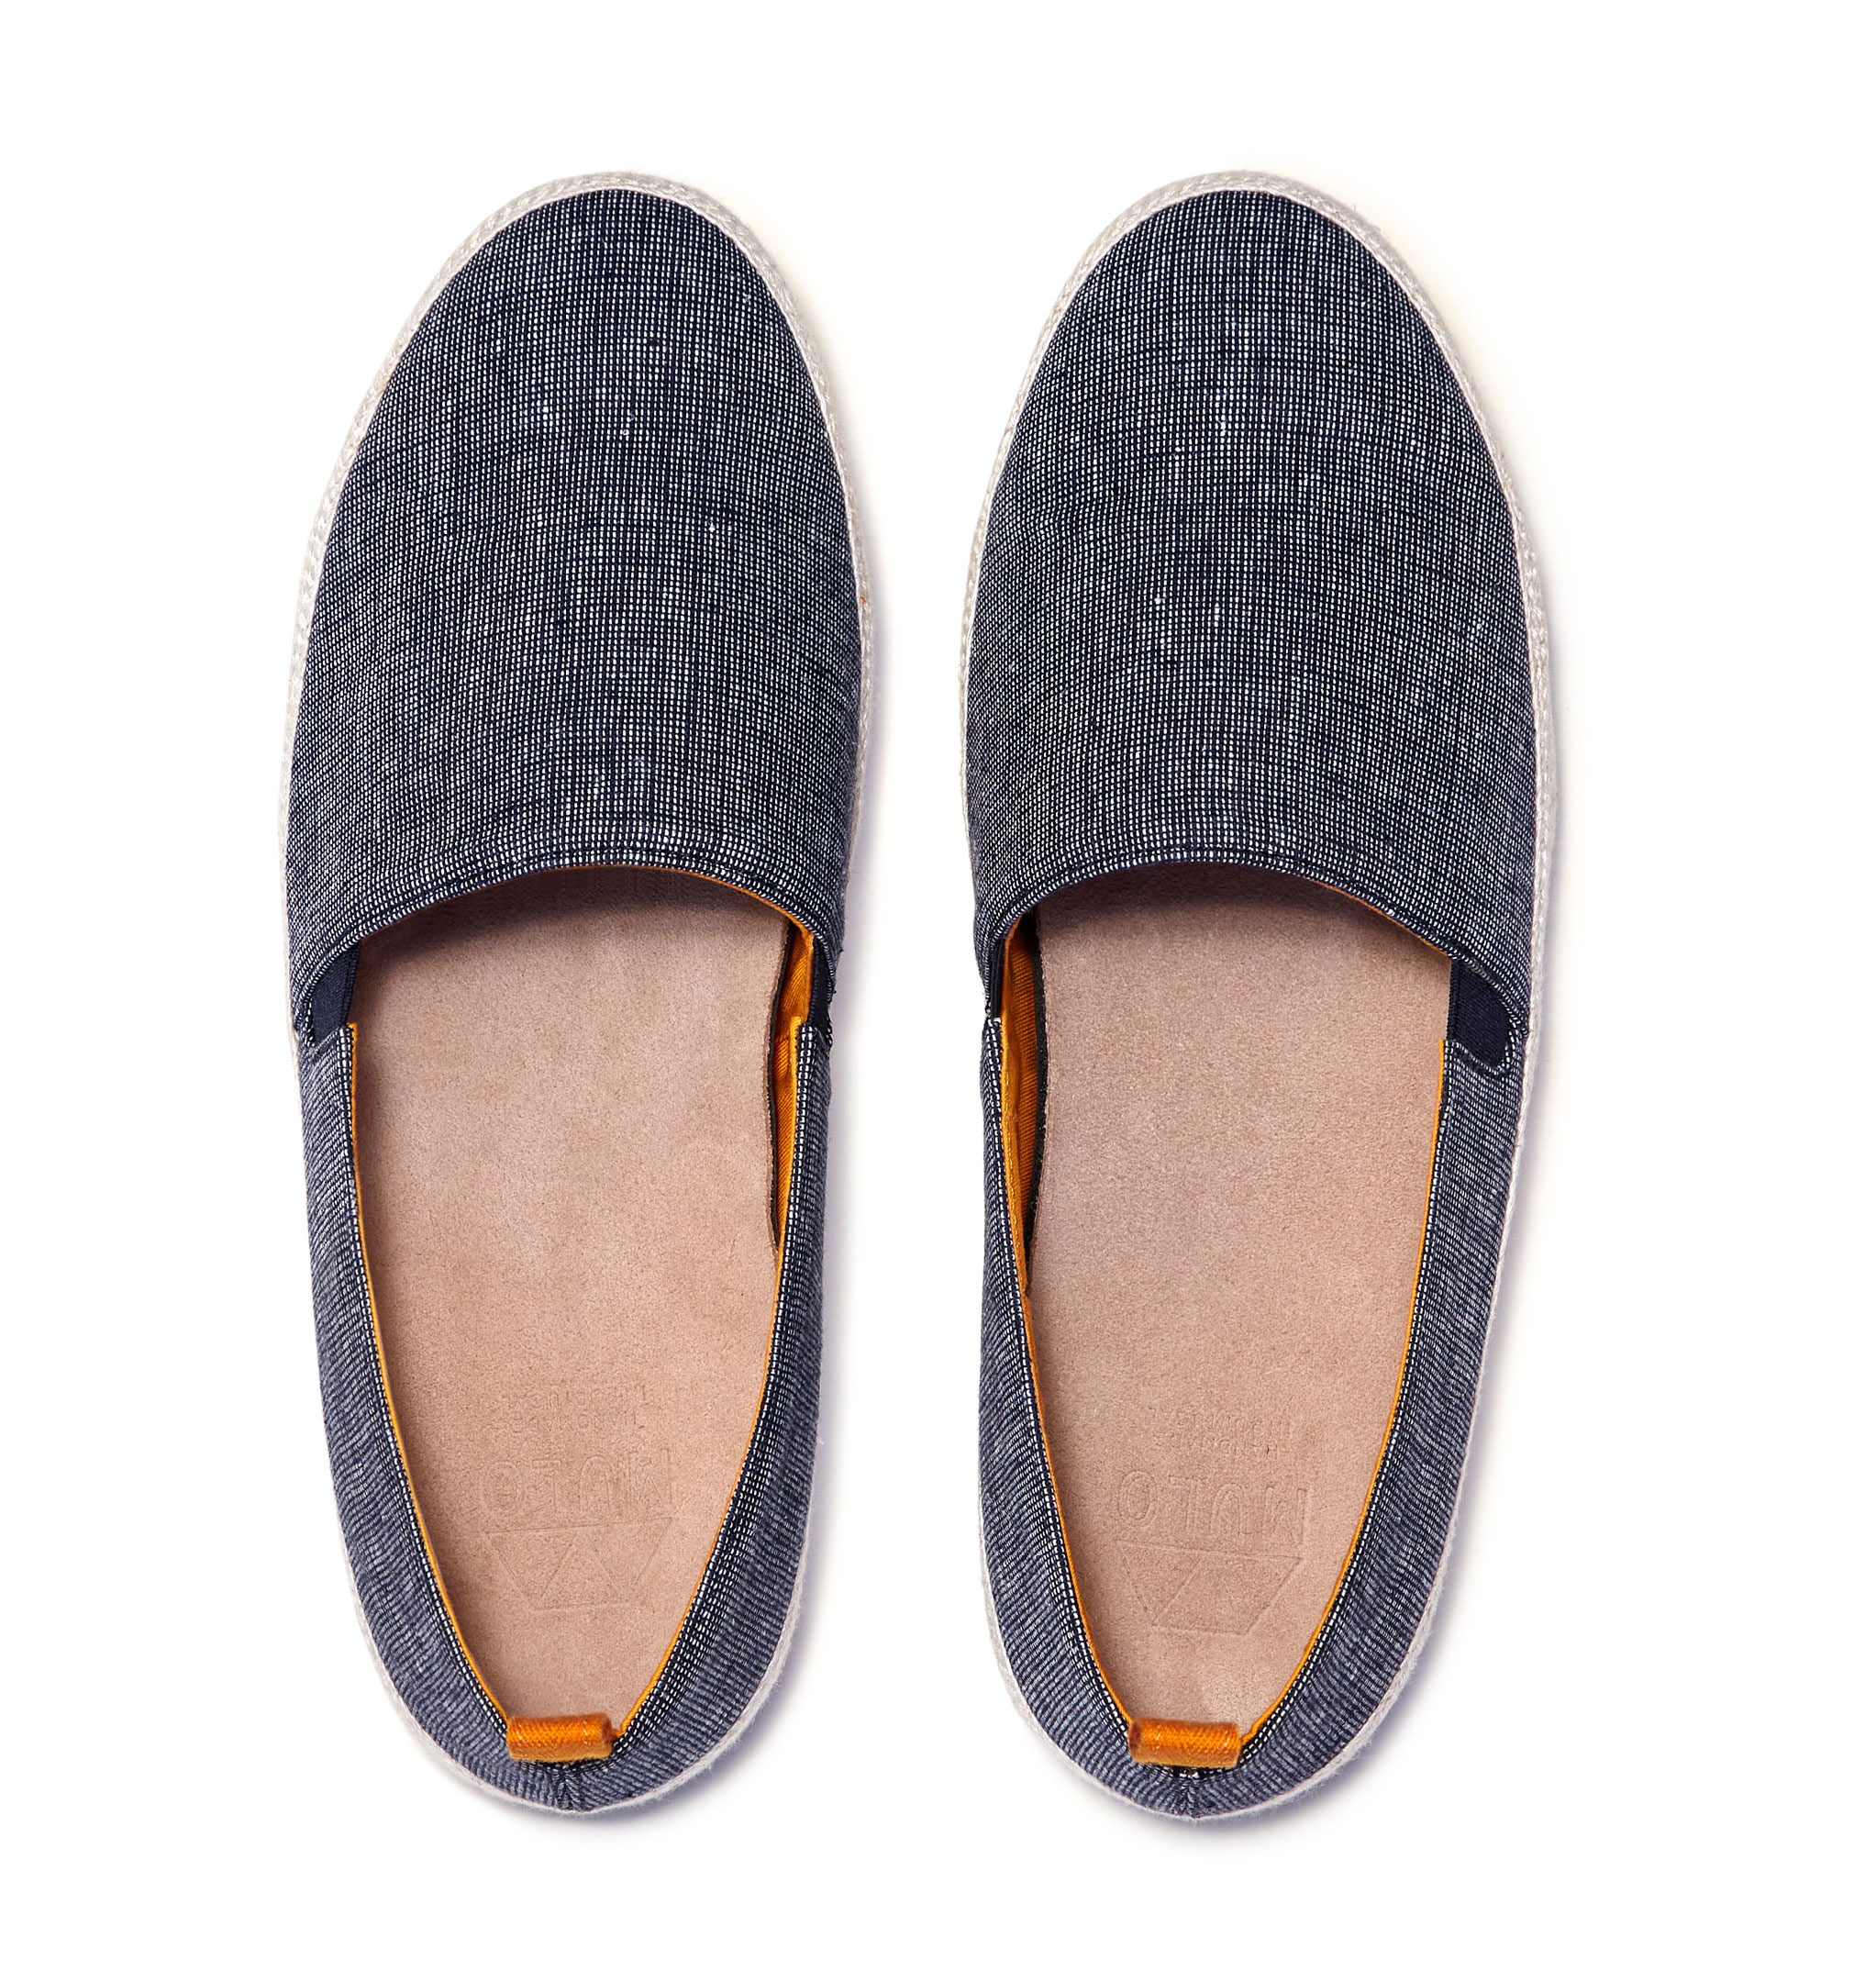 Mens Blue Espadrilles | MULO shoes | High-quality Navy Linen